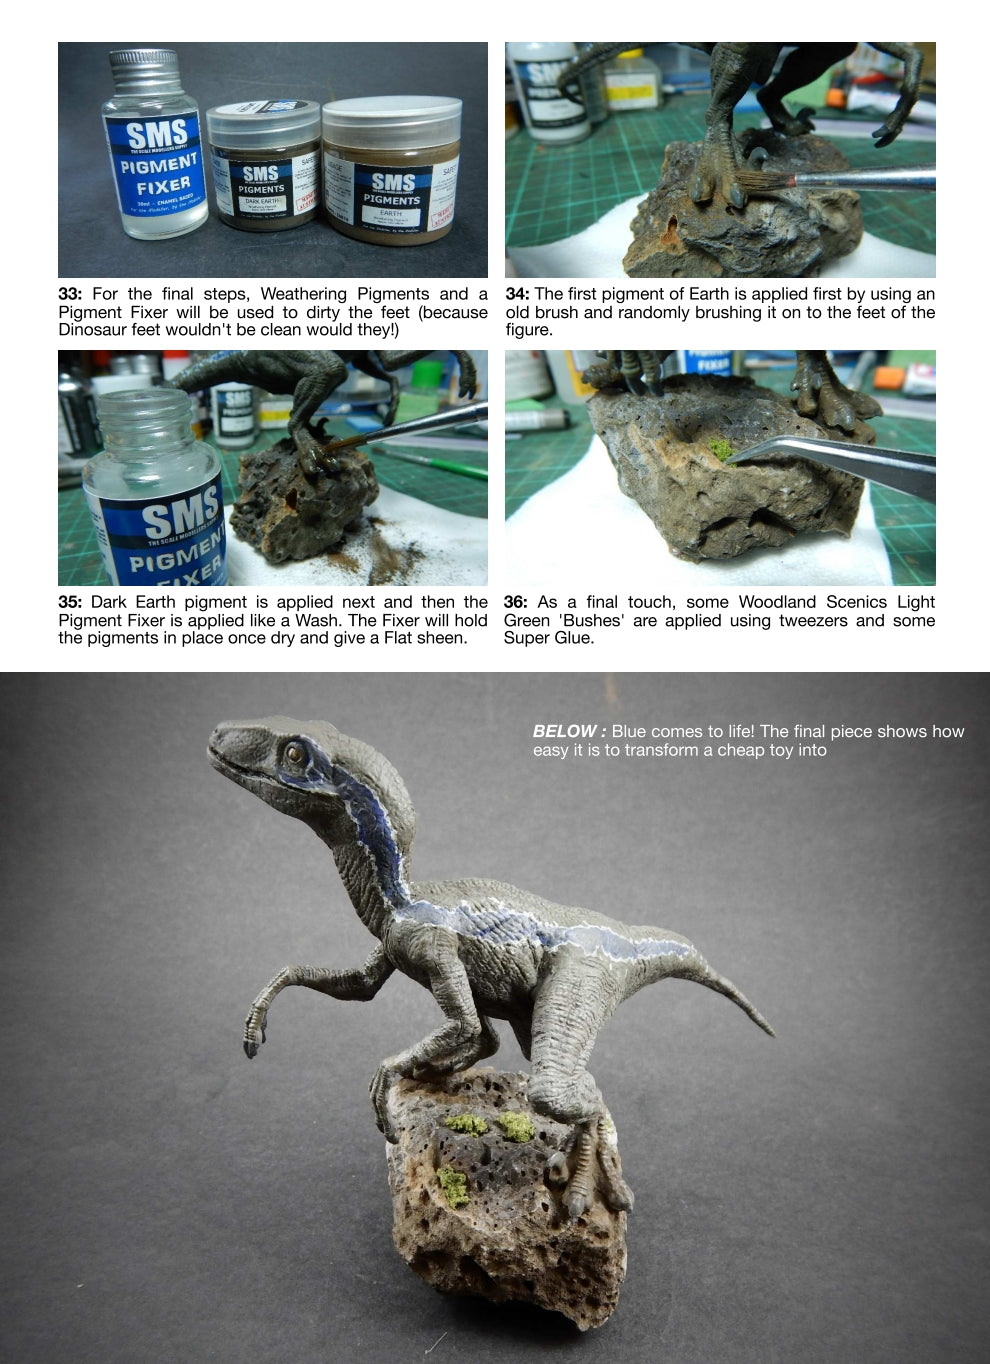 Dinosaur Modelling - Bringing the Past Back to Life